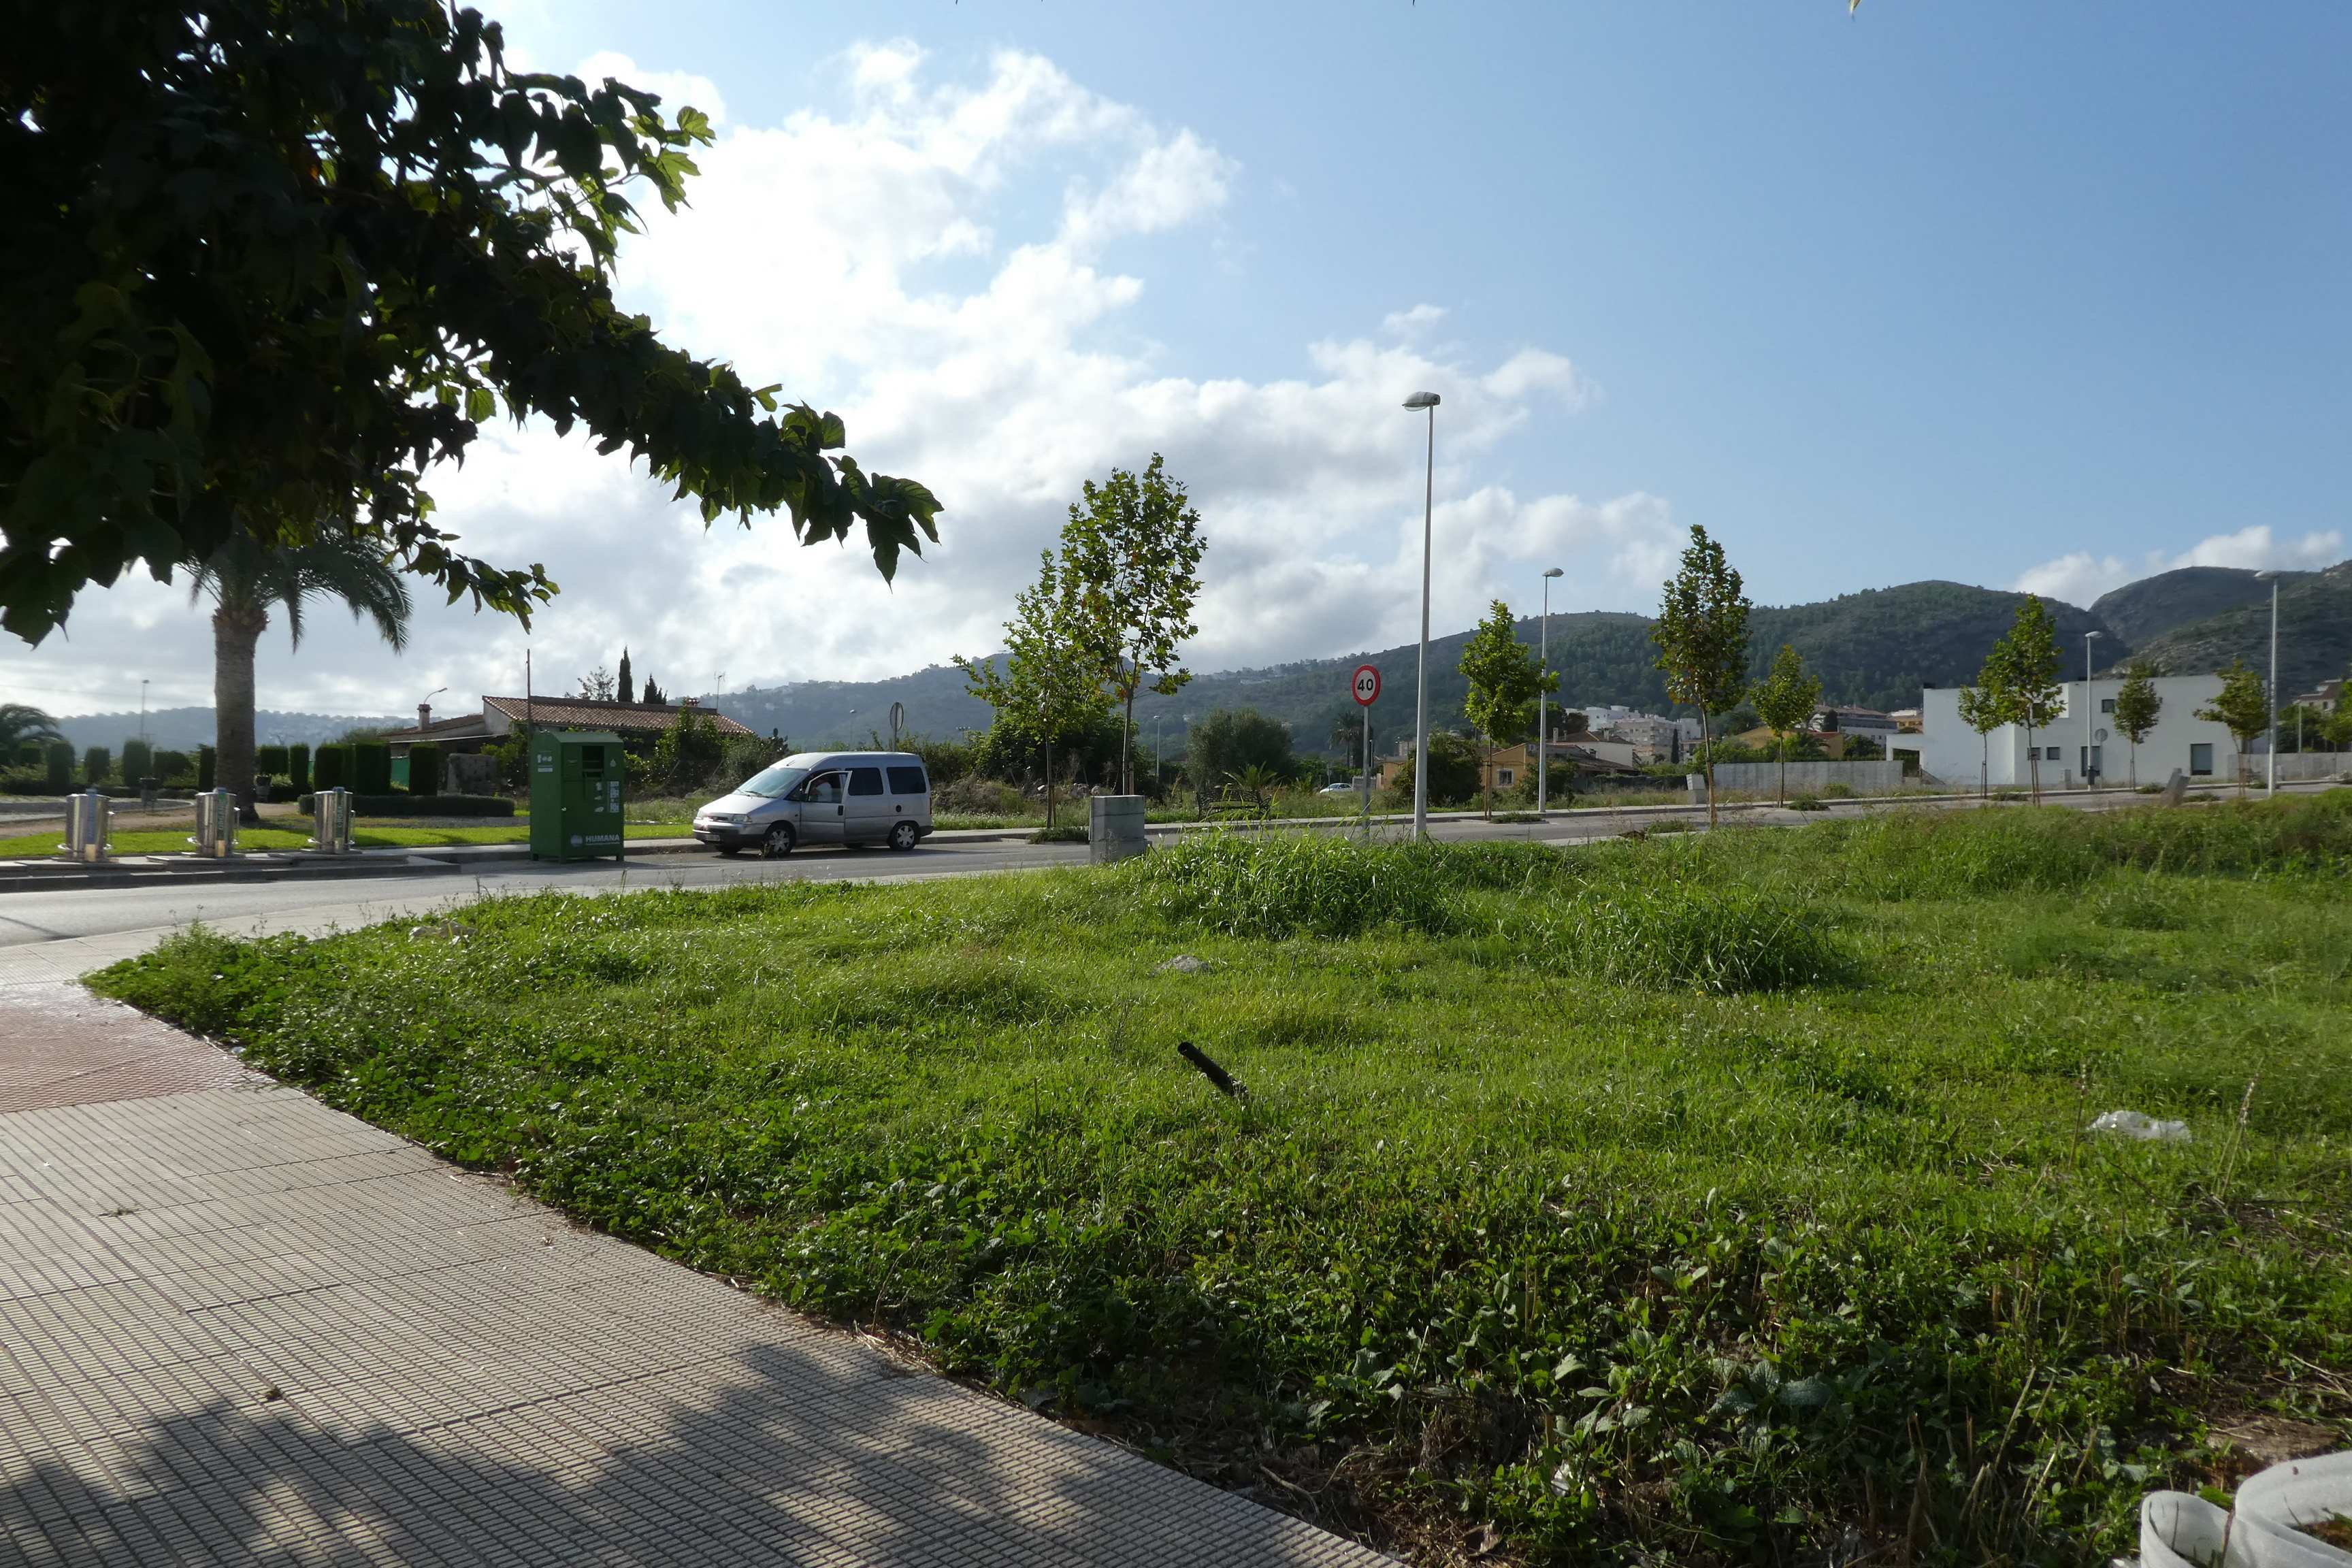 Plot of urban land for sale in Pedreguer